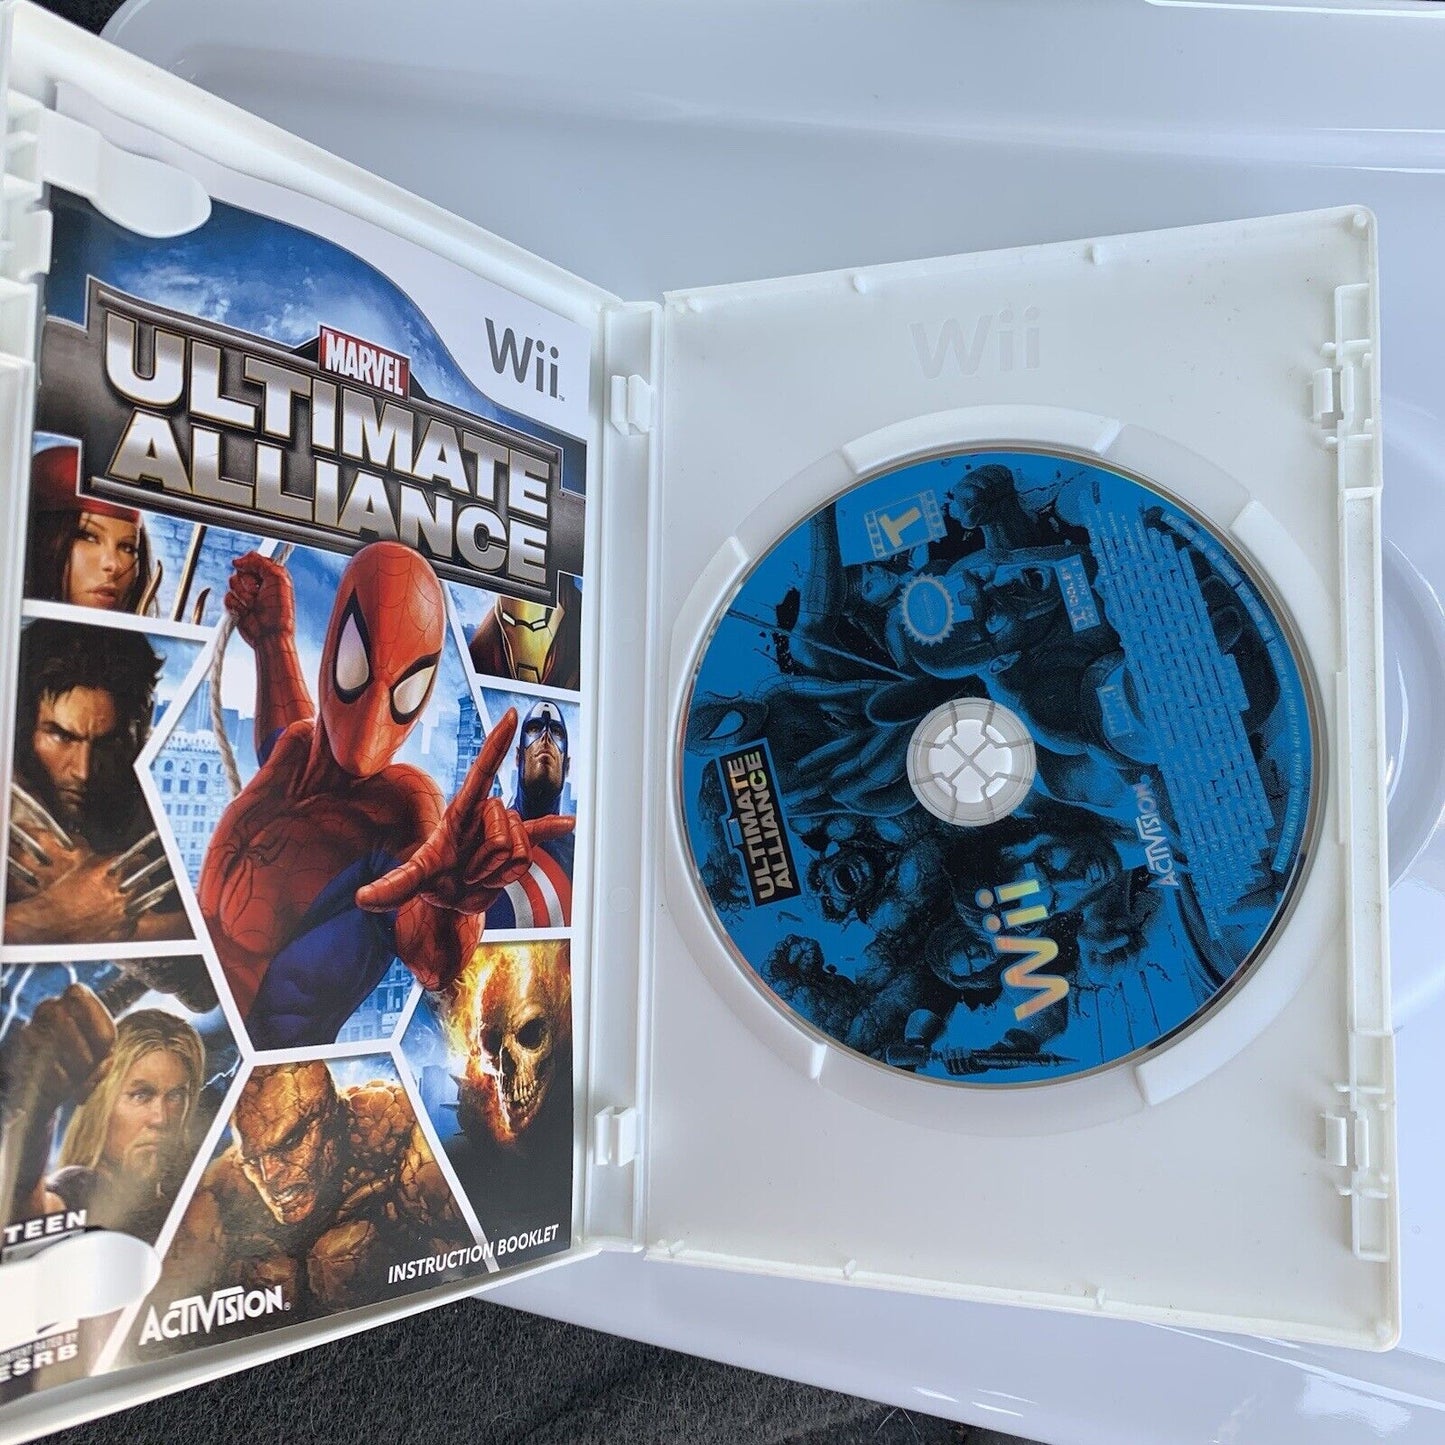 Marvel Ultimate Alliance Nintendo Wii 2009 Game Tested Disk Works Clean